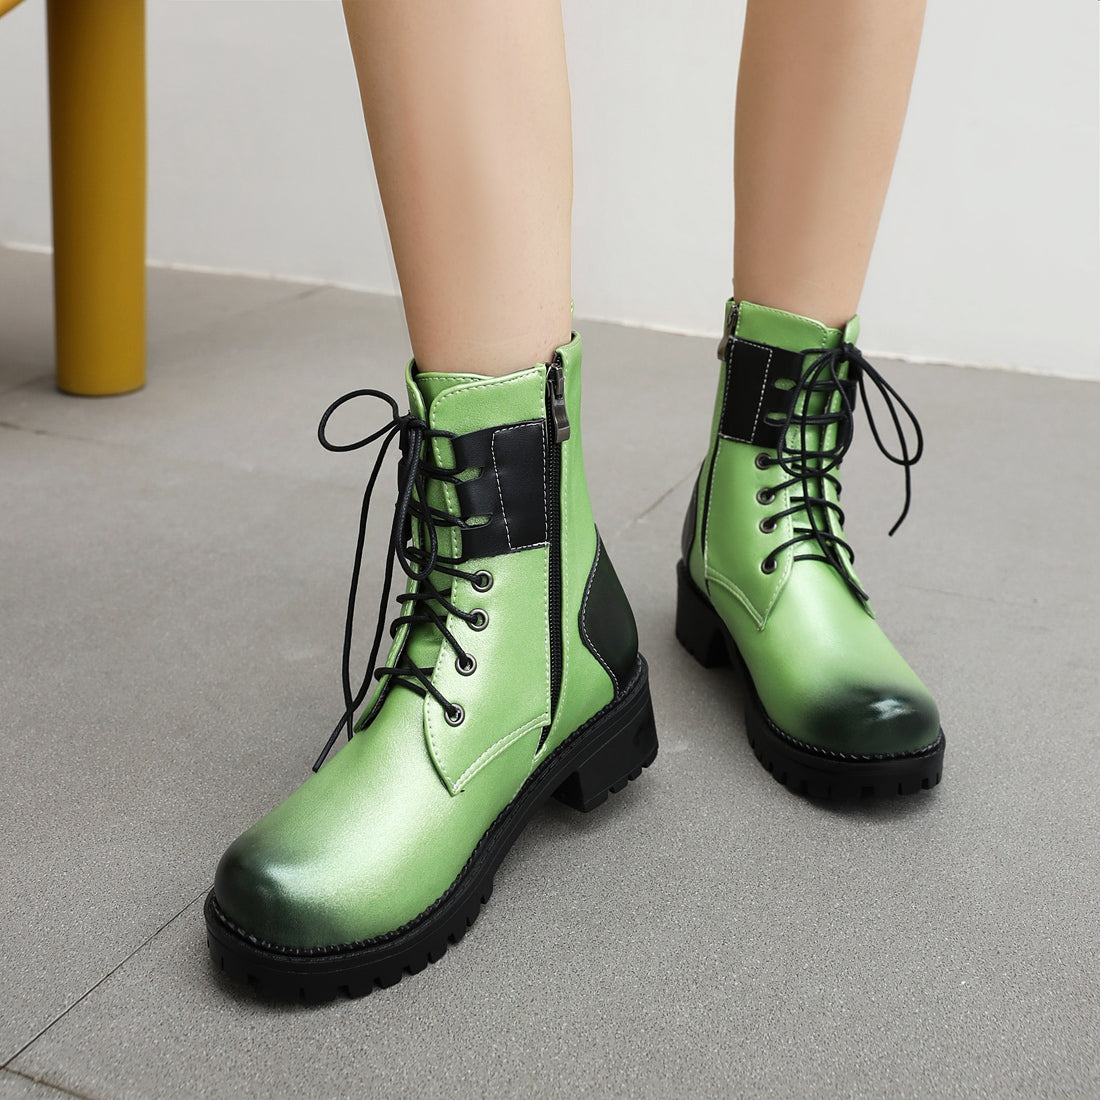 Bigsizeheels Colorblock retro fashion Martin boots - Green freeshipping - bigsizeheel®-size5-size15 -All Plus Sizes Available!